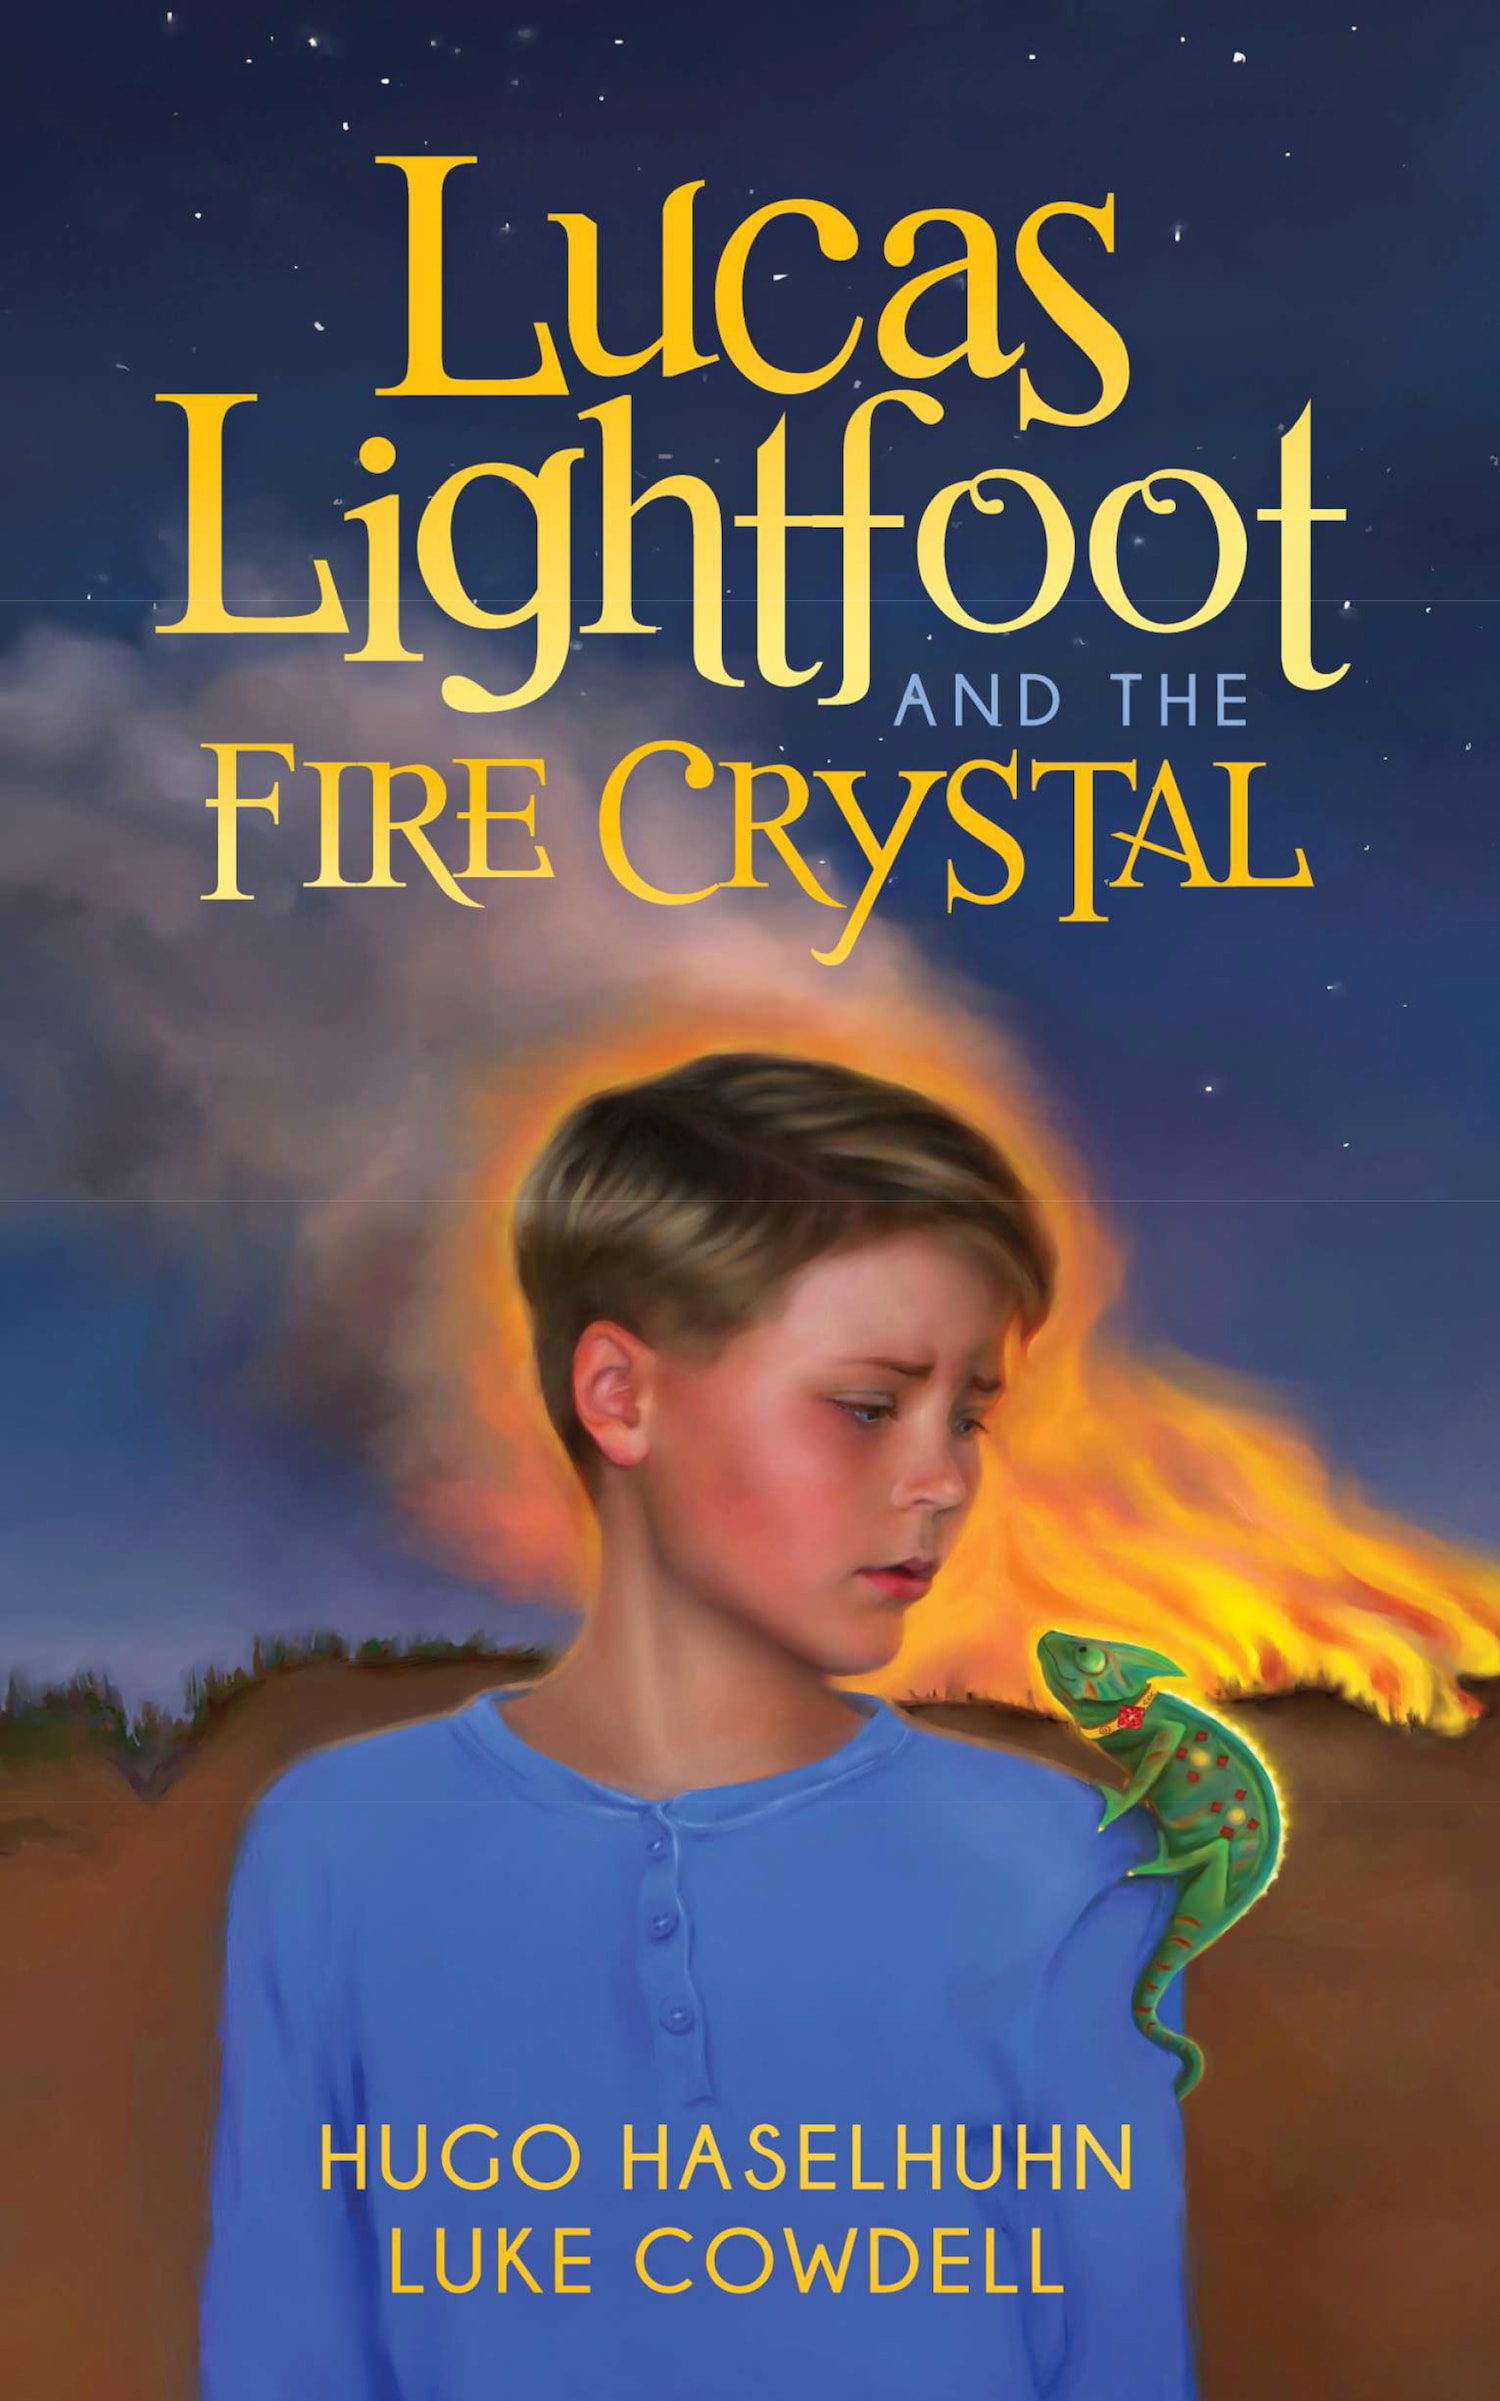 Lucas Lightfoot and the Fire Crystal (Morgan James Kids)